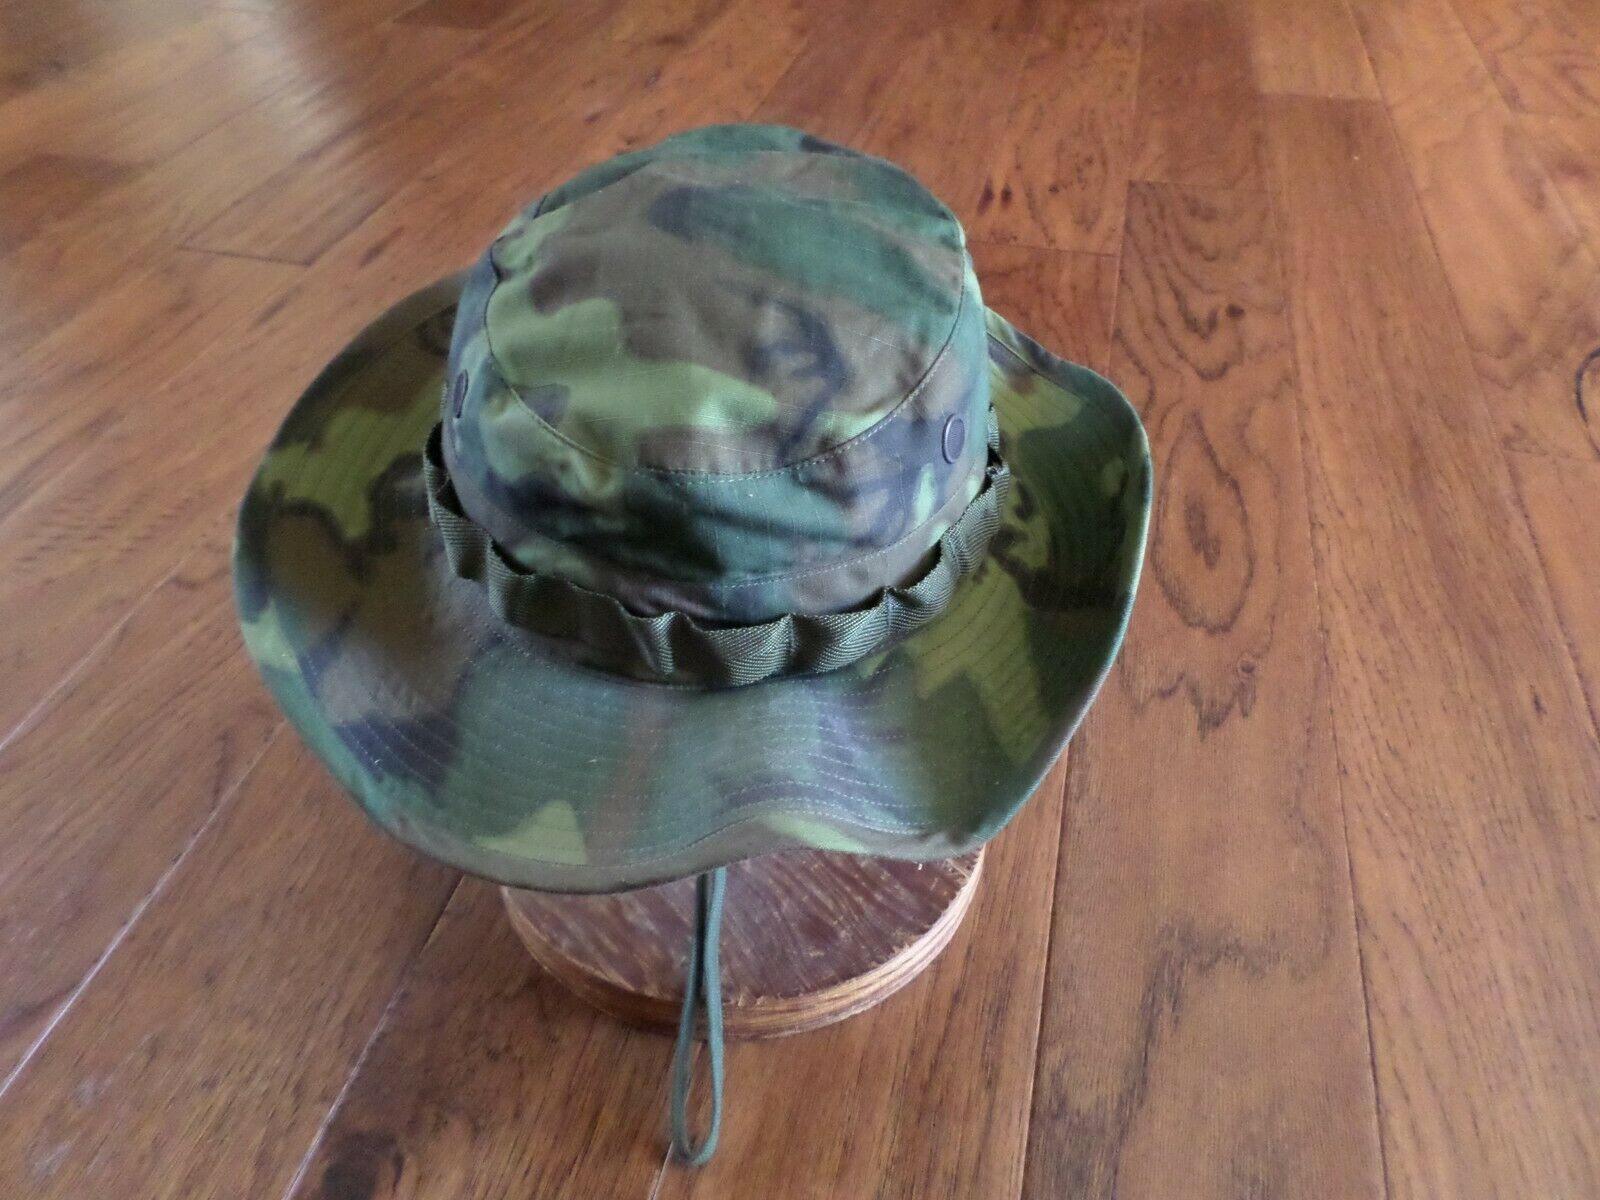 U.s Military Issue Vietnam Jungle Hat Camouflage Boonie Hat Date 1968 Size 6 7/8